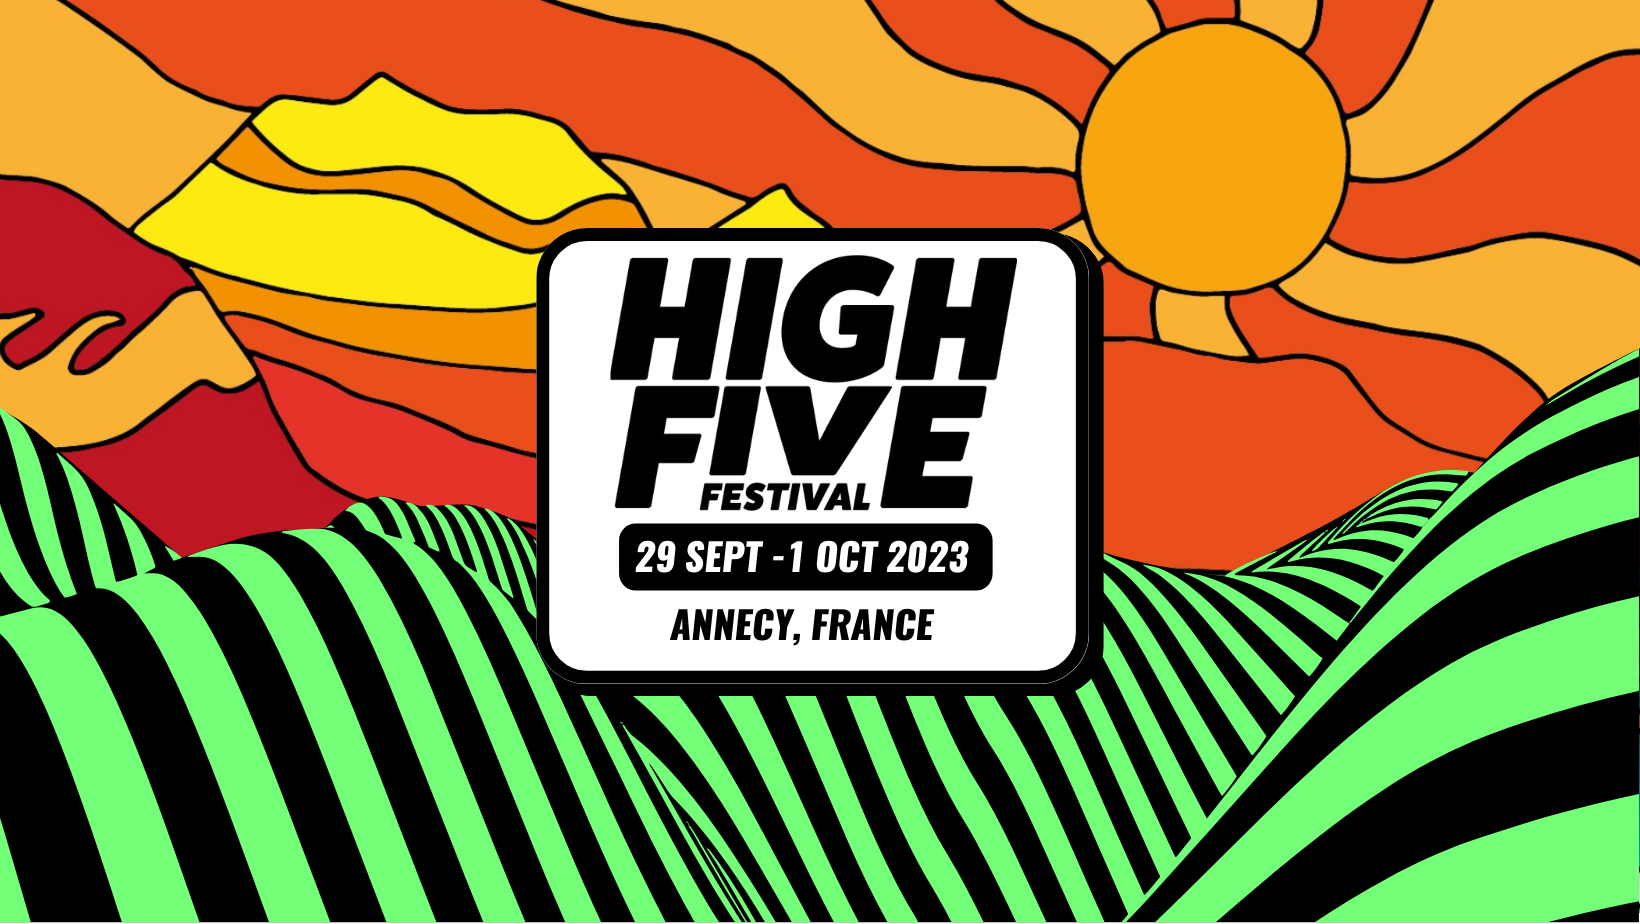 High Five Festival - Sept. 29 - Oct 1st. 2023 - High Five Festival